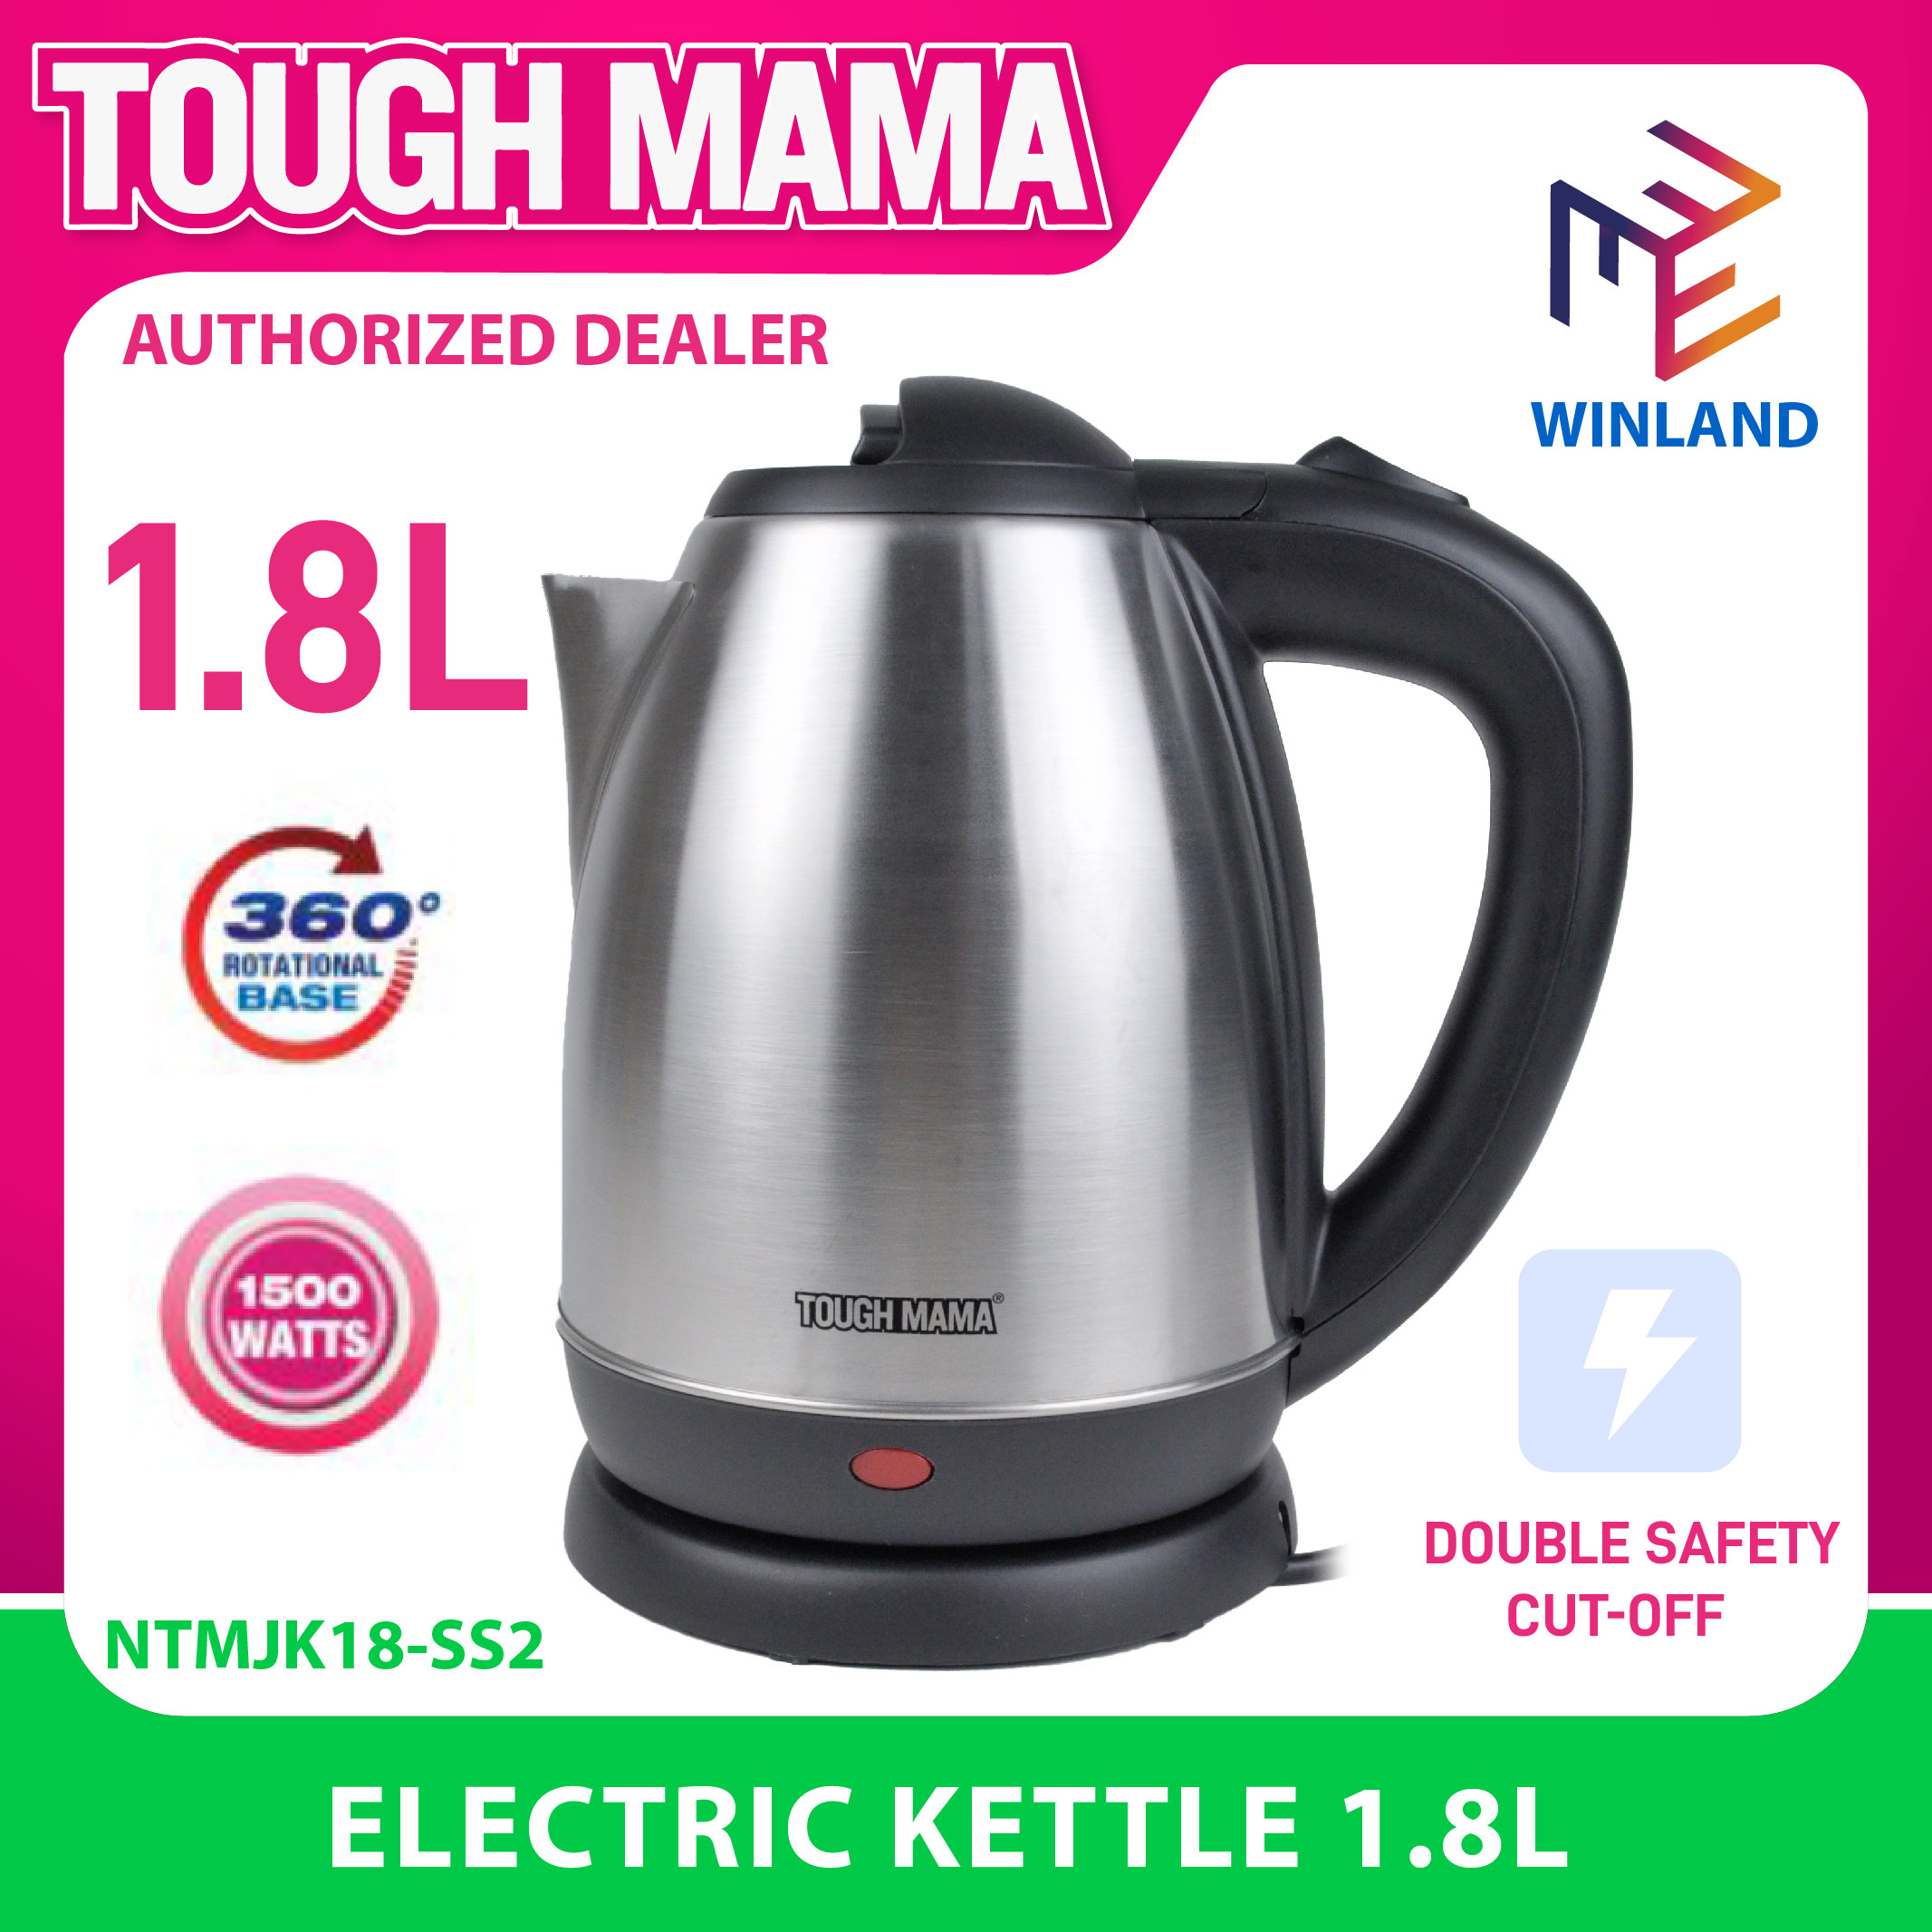 tough mama electric kettle